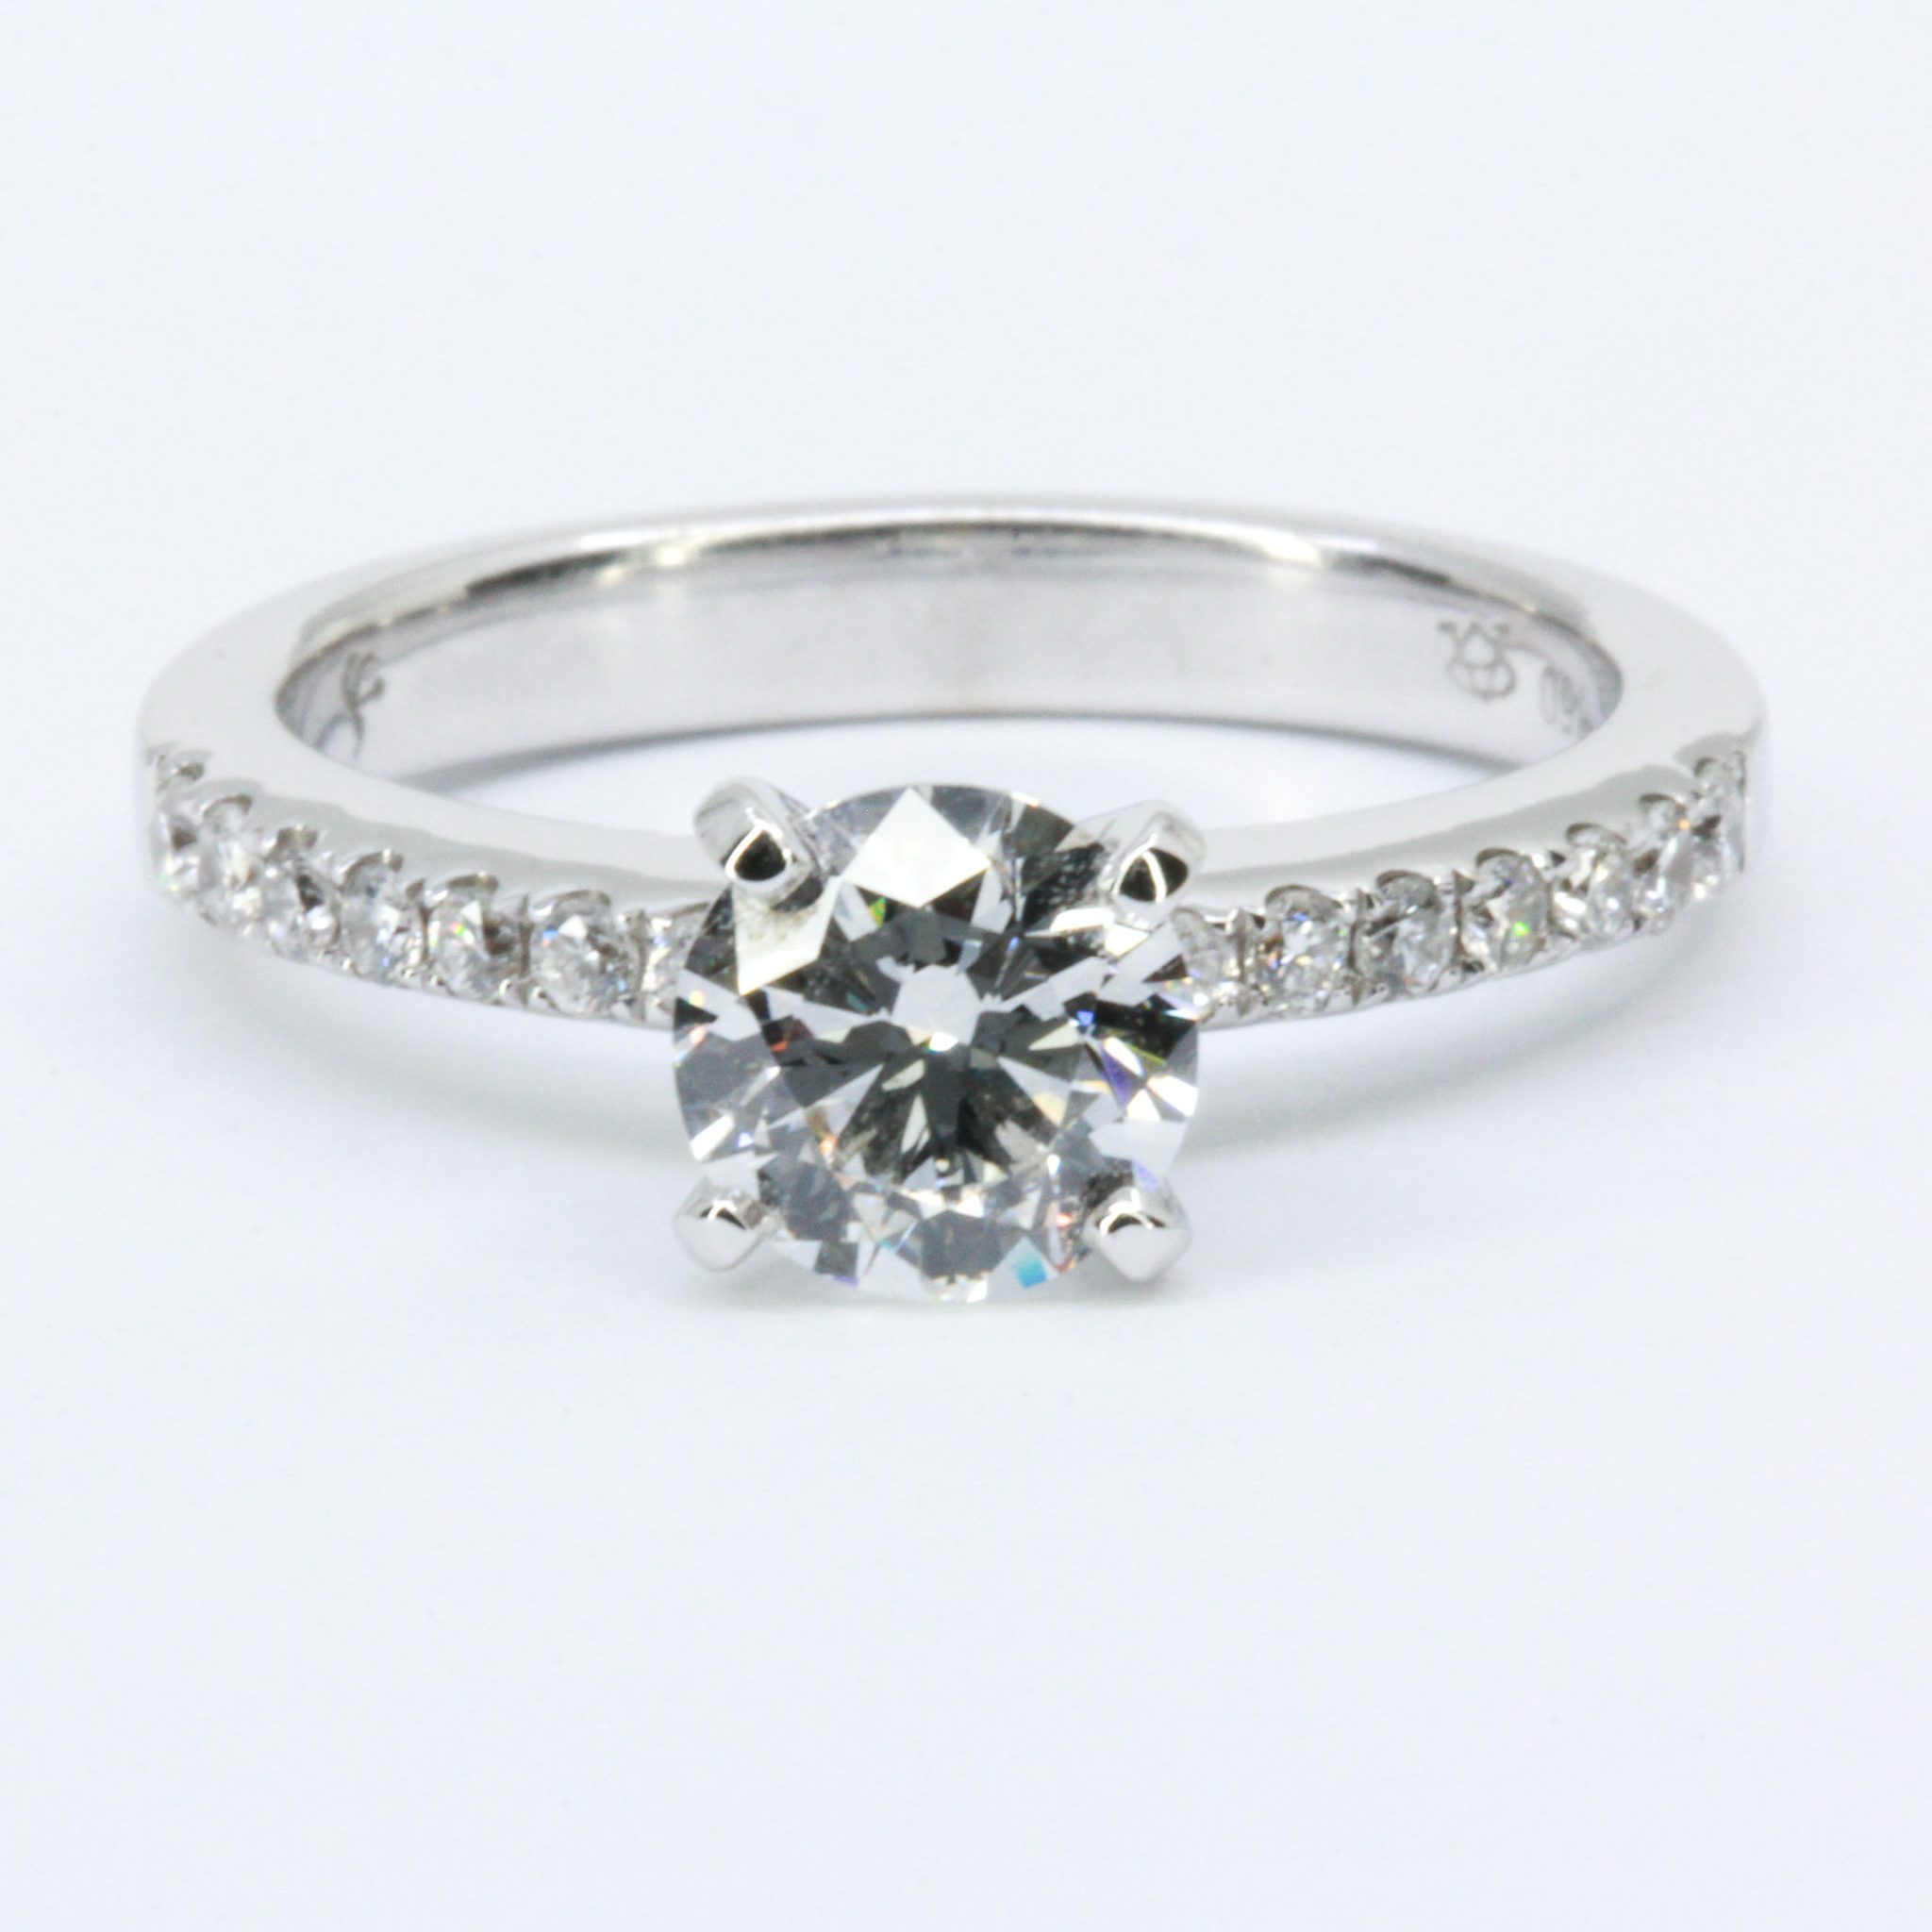 18ct White Gold Certified Round Brilliant Cut Diamond Ring | Allgem ...